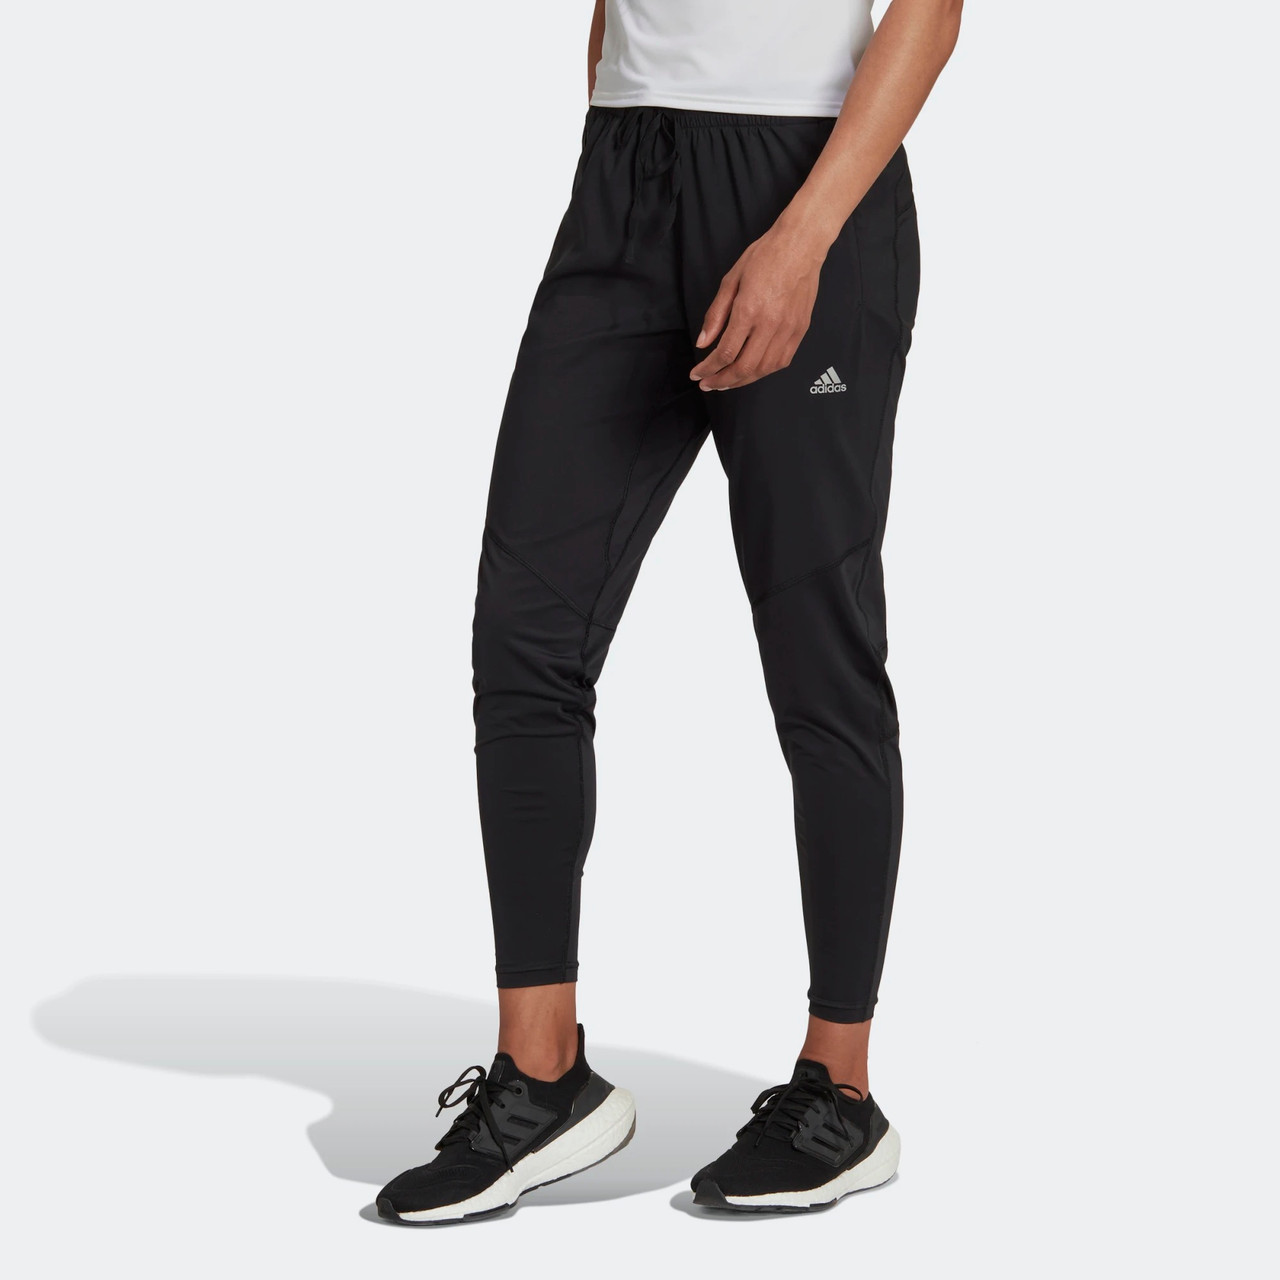 adidas Women's Tiro19 Training Pant, Black/White, XS 